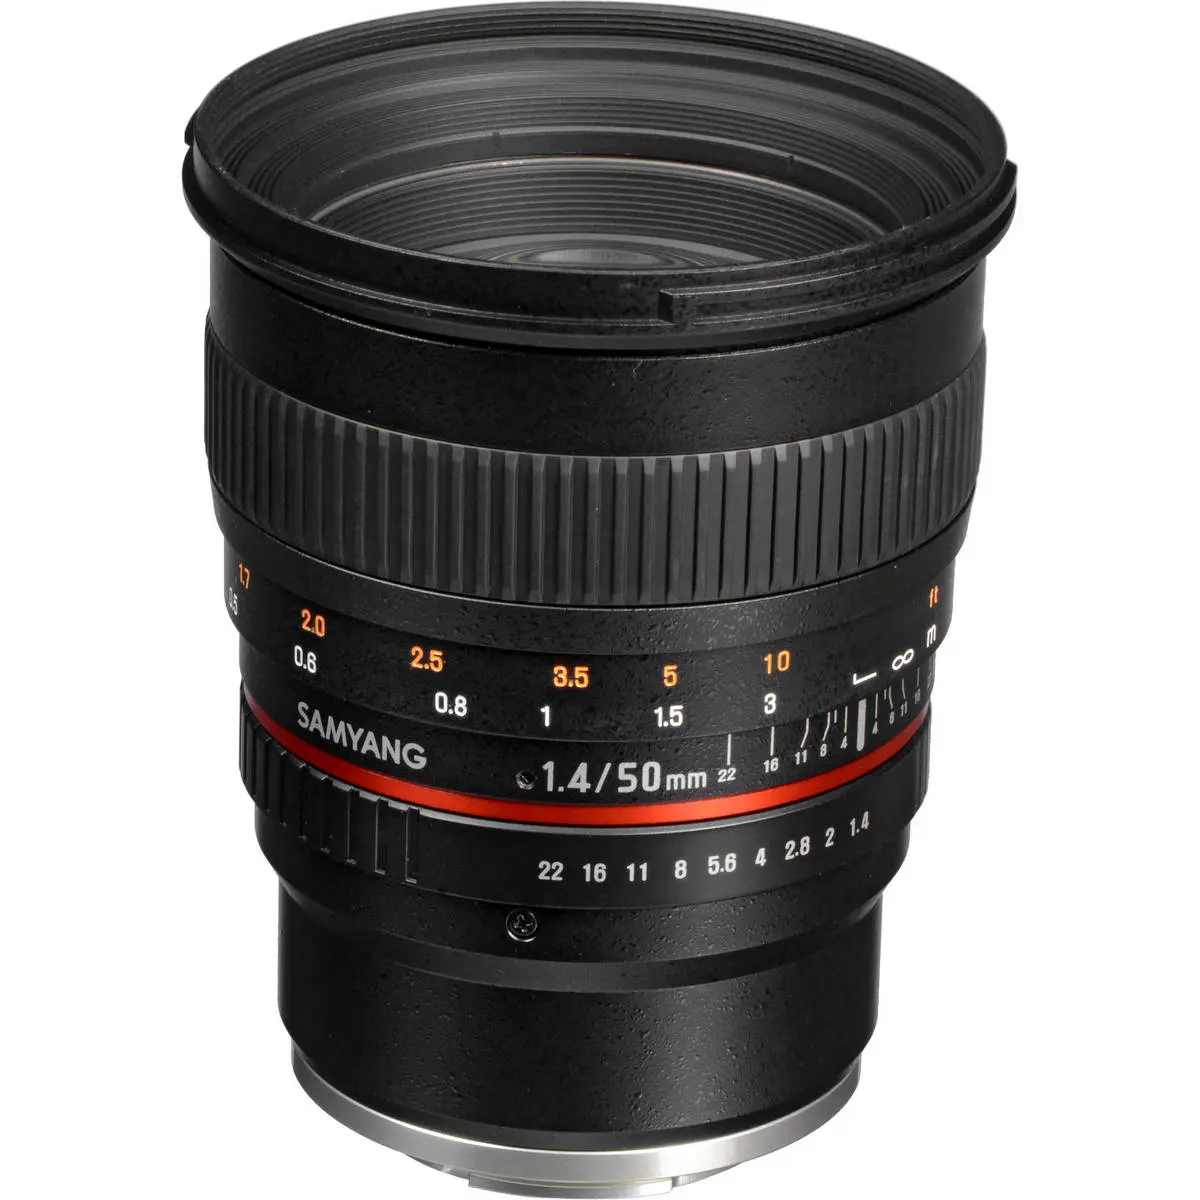 1. Samyang 50 mm f/1.4 AS UMC (Sony A) Lens